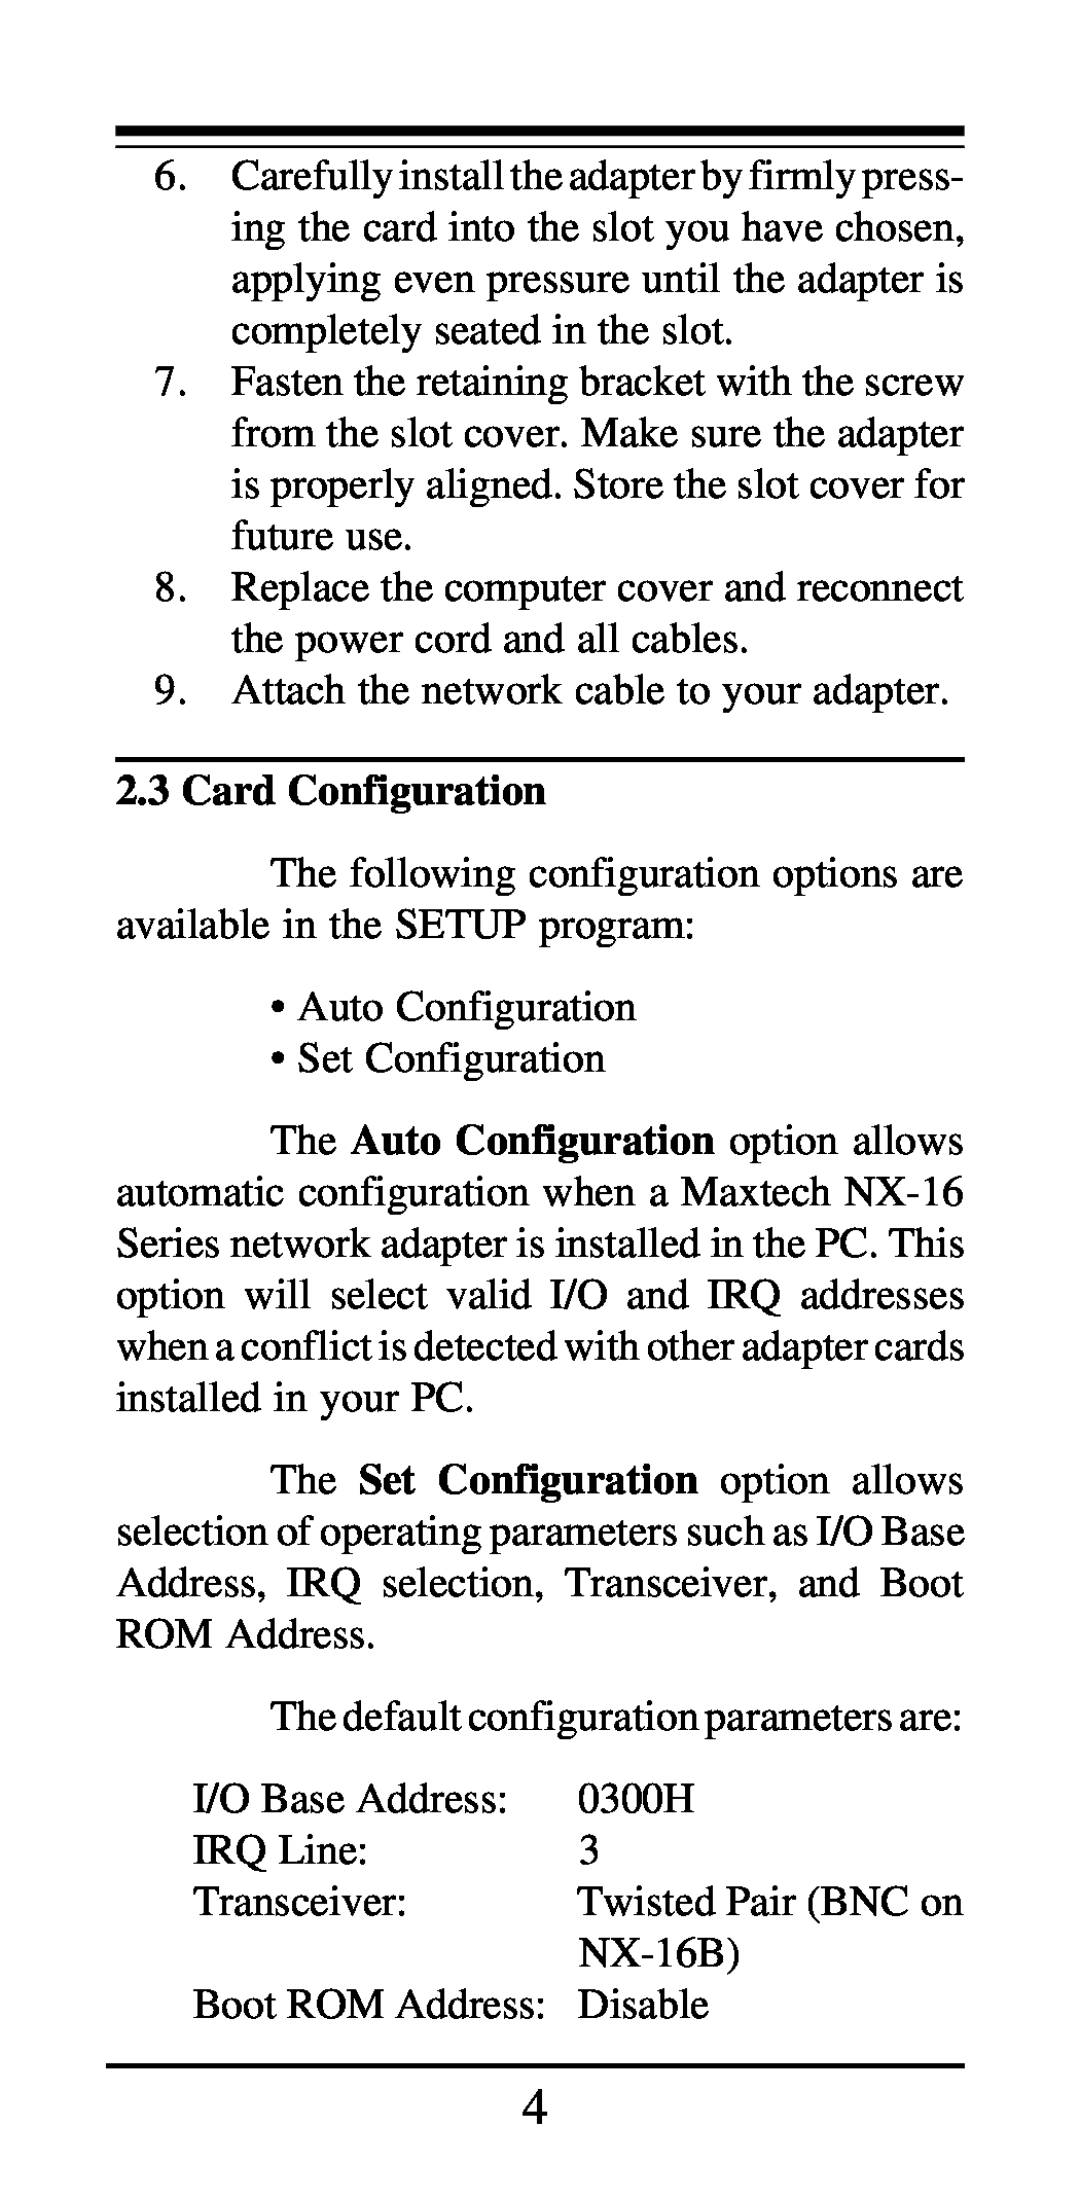 MaxTech NX-16 manual Card Configuration 